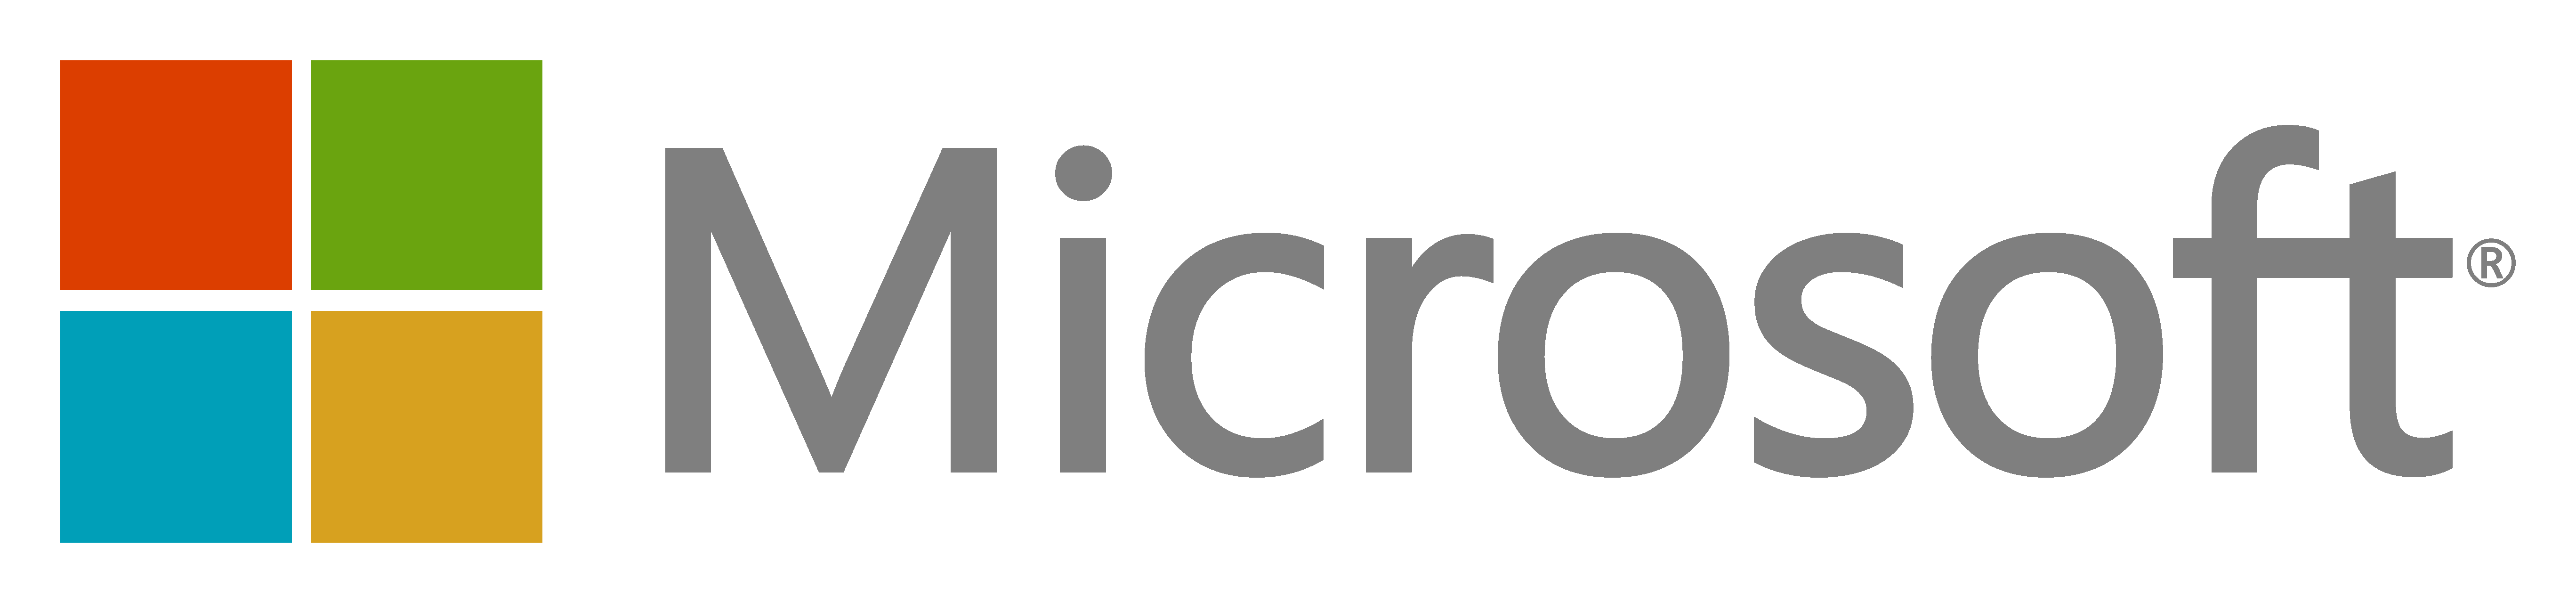 Windows Microsoft Logo Descargar imagen PNG Transparente